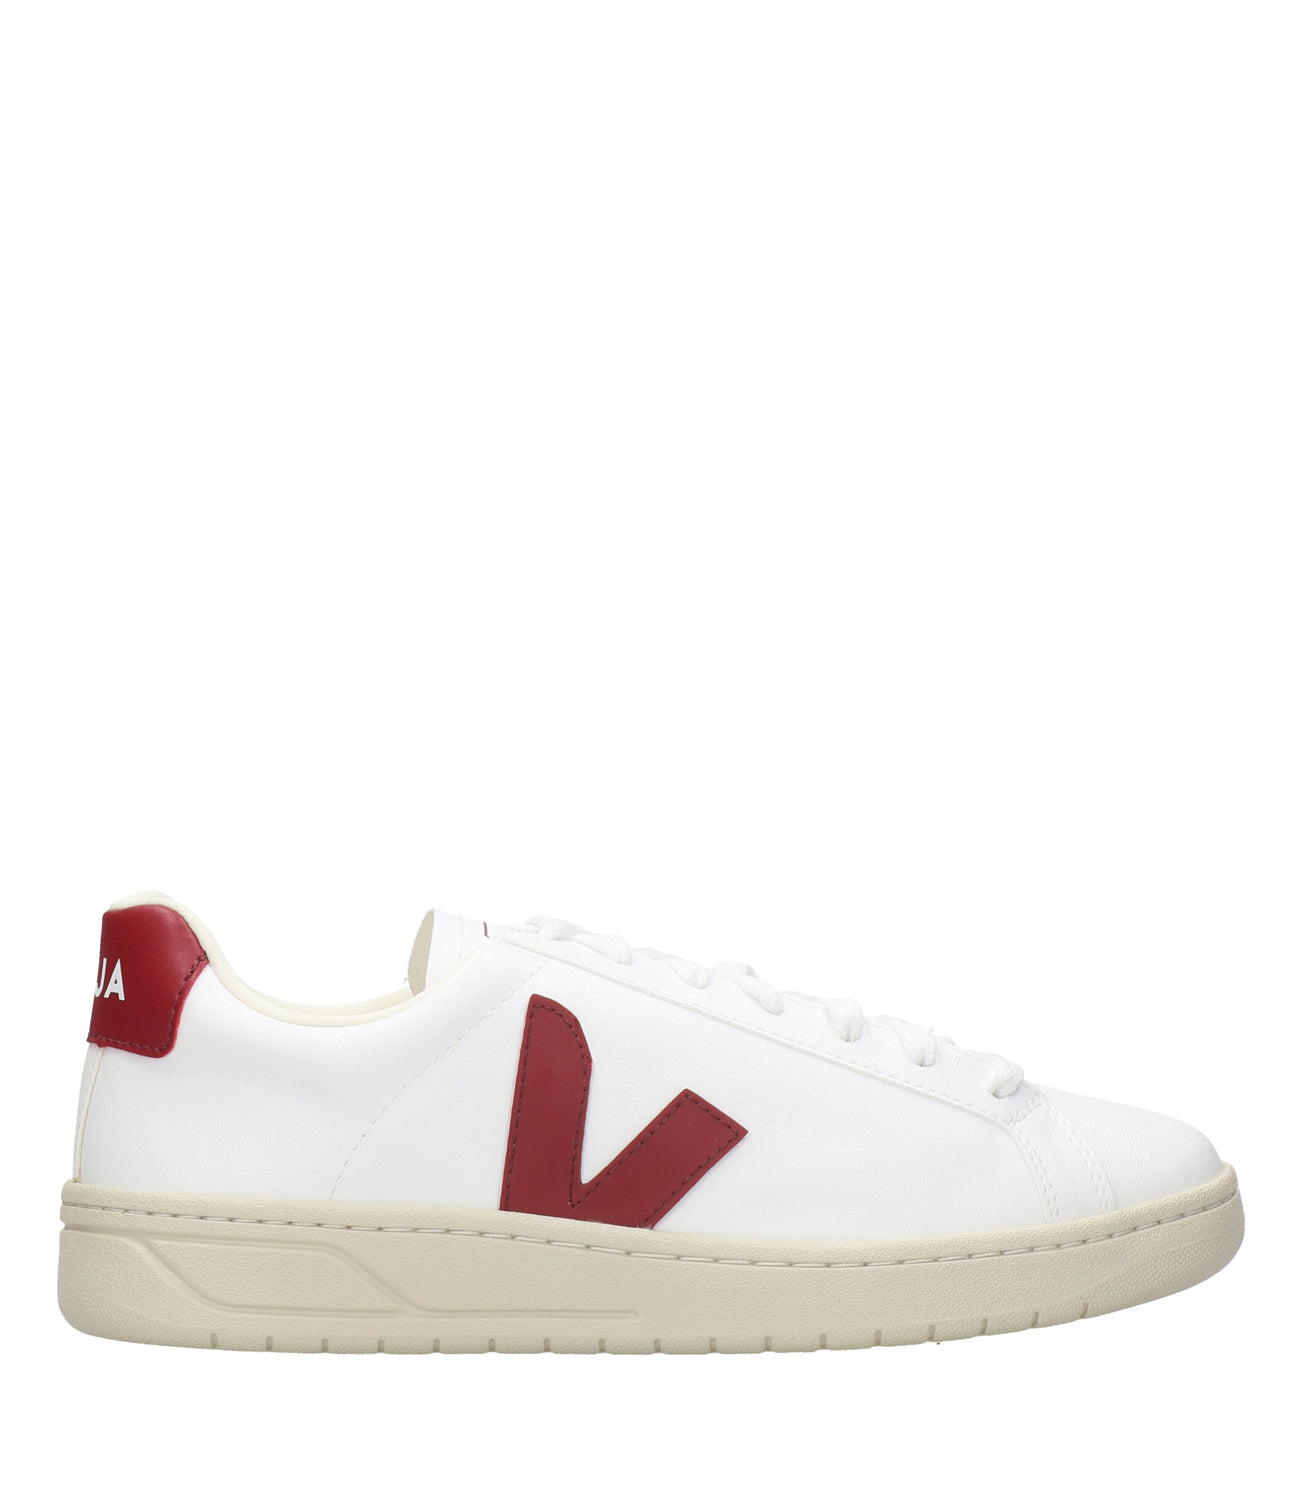 Veja | Sneakers V-10 CWL White and Bordeaux